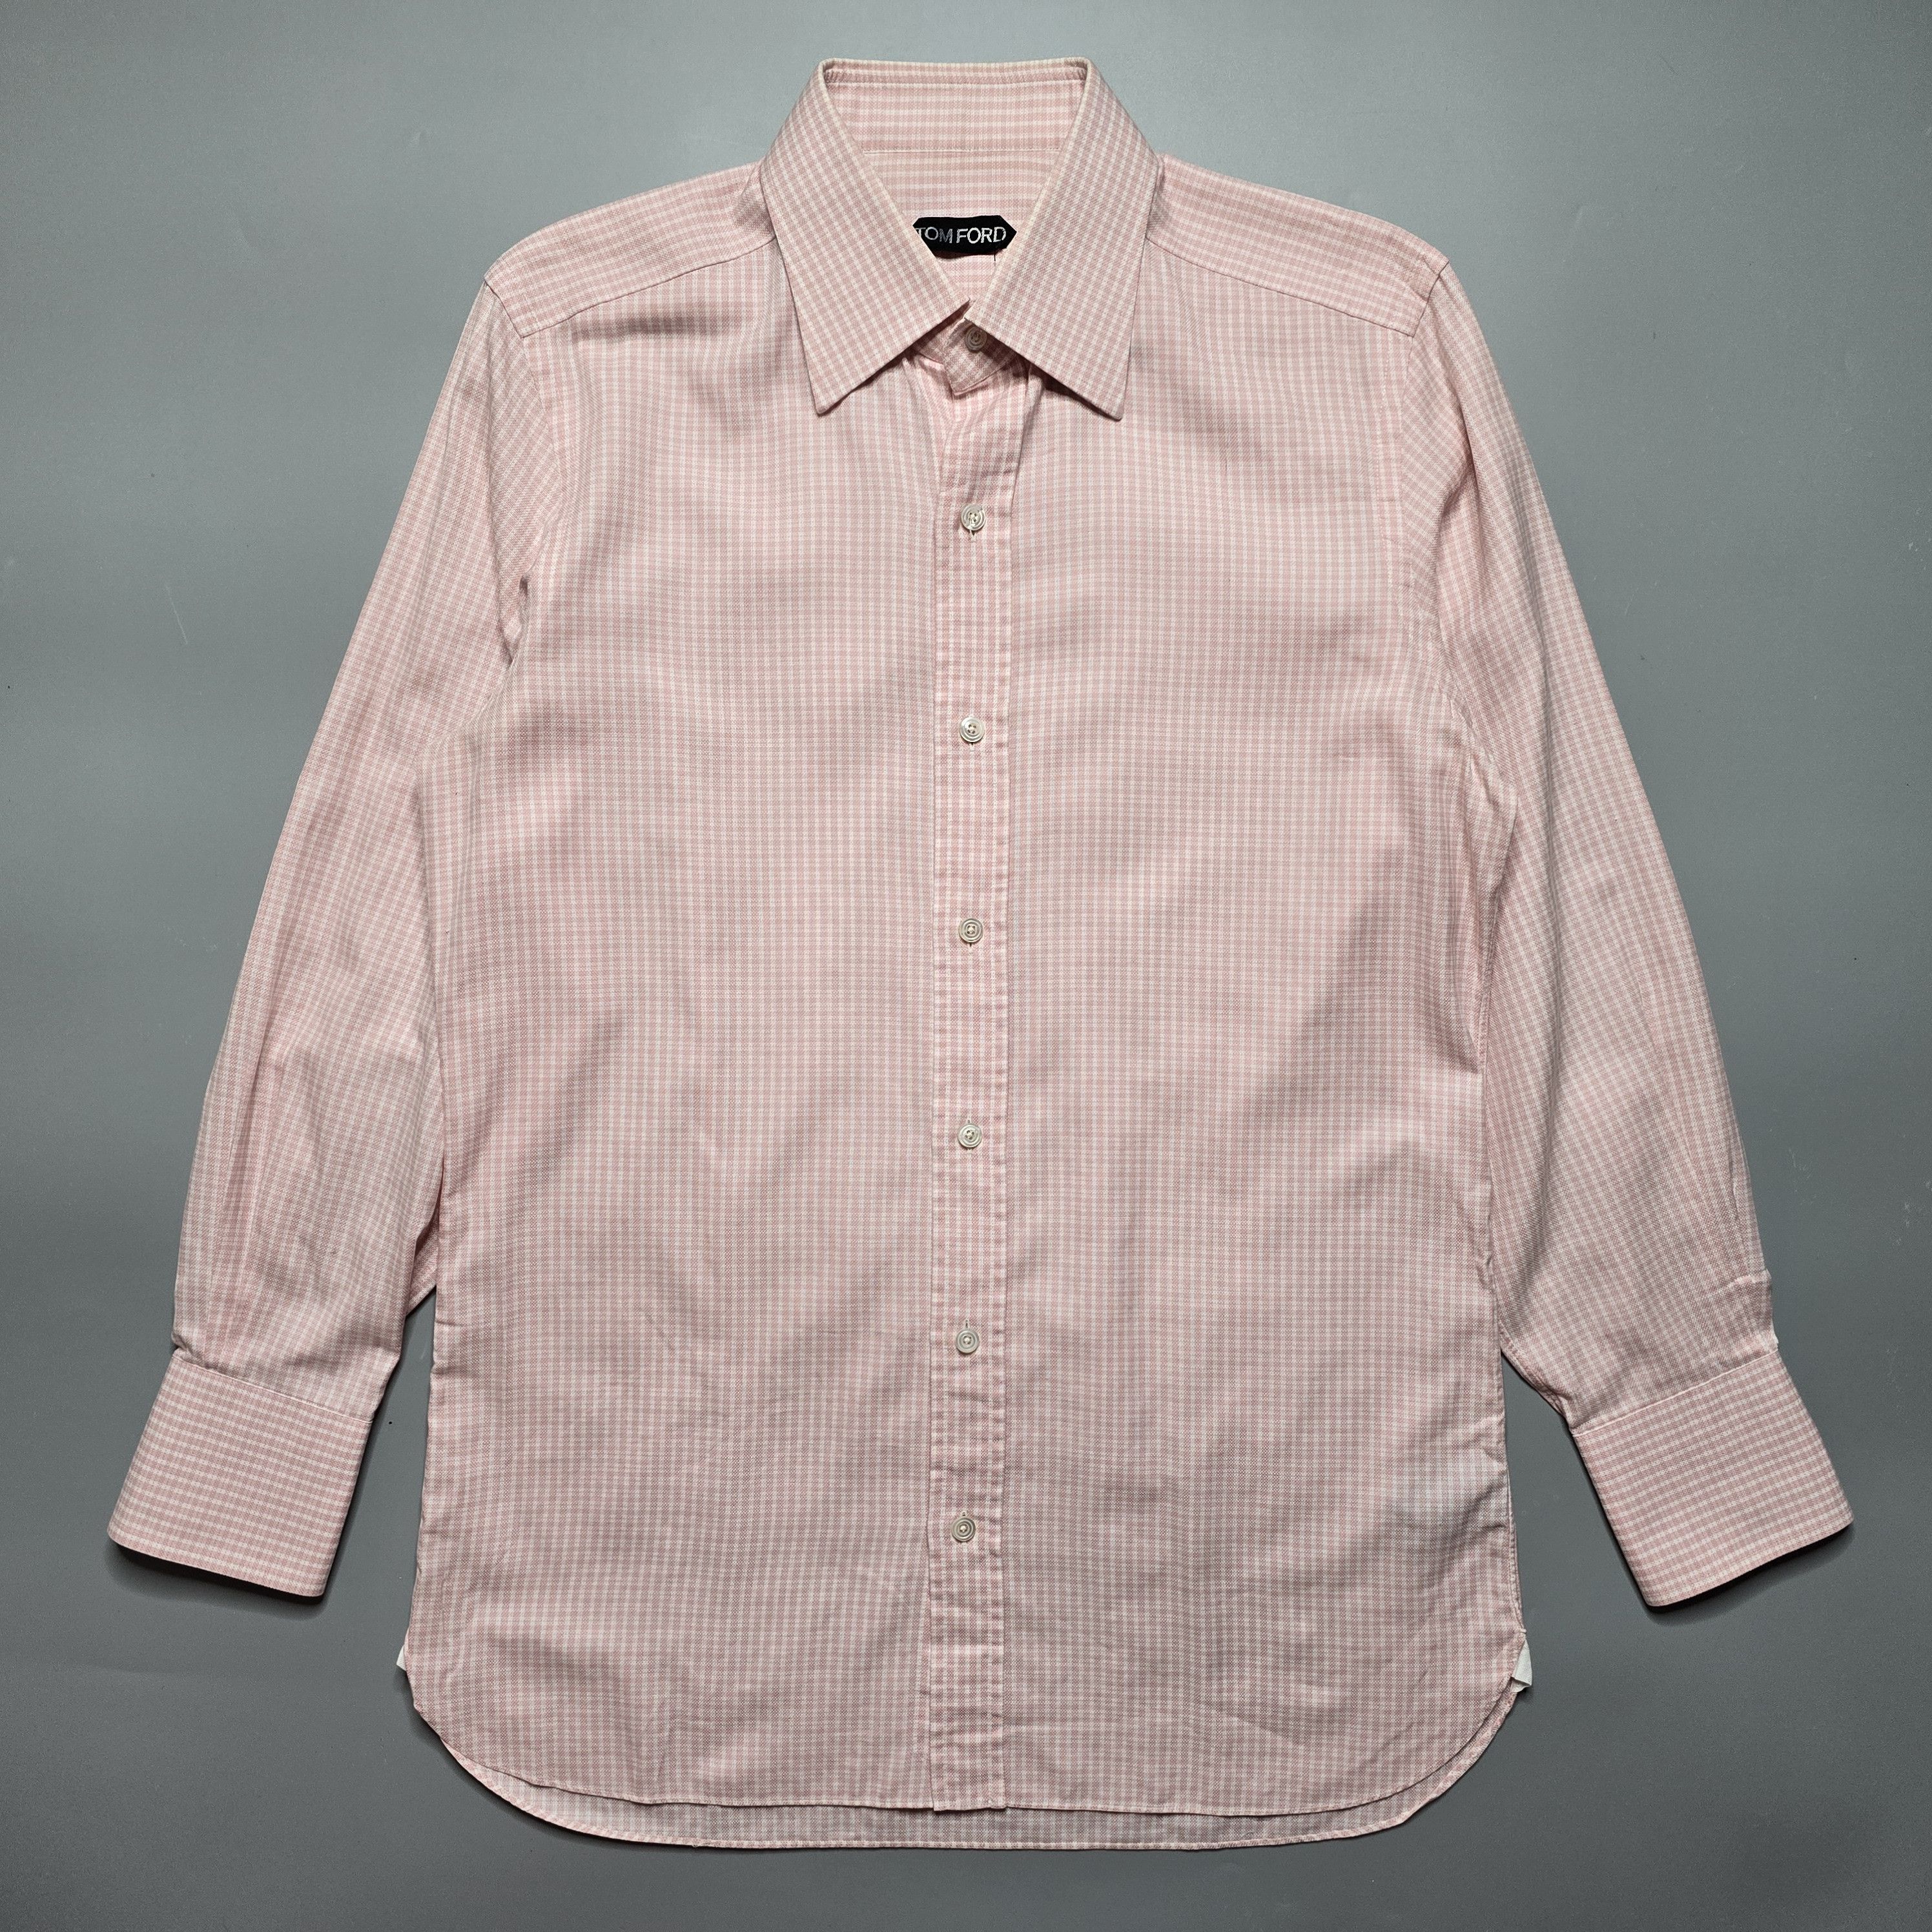 Tom Ford - Salmon Gingham Dress Shirt - 1